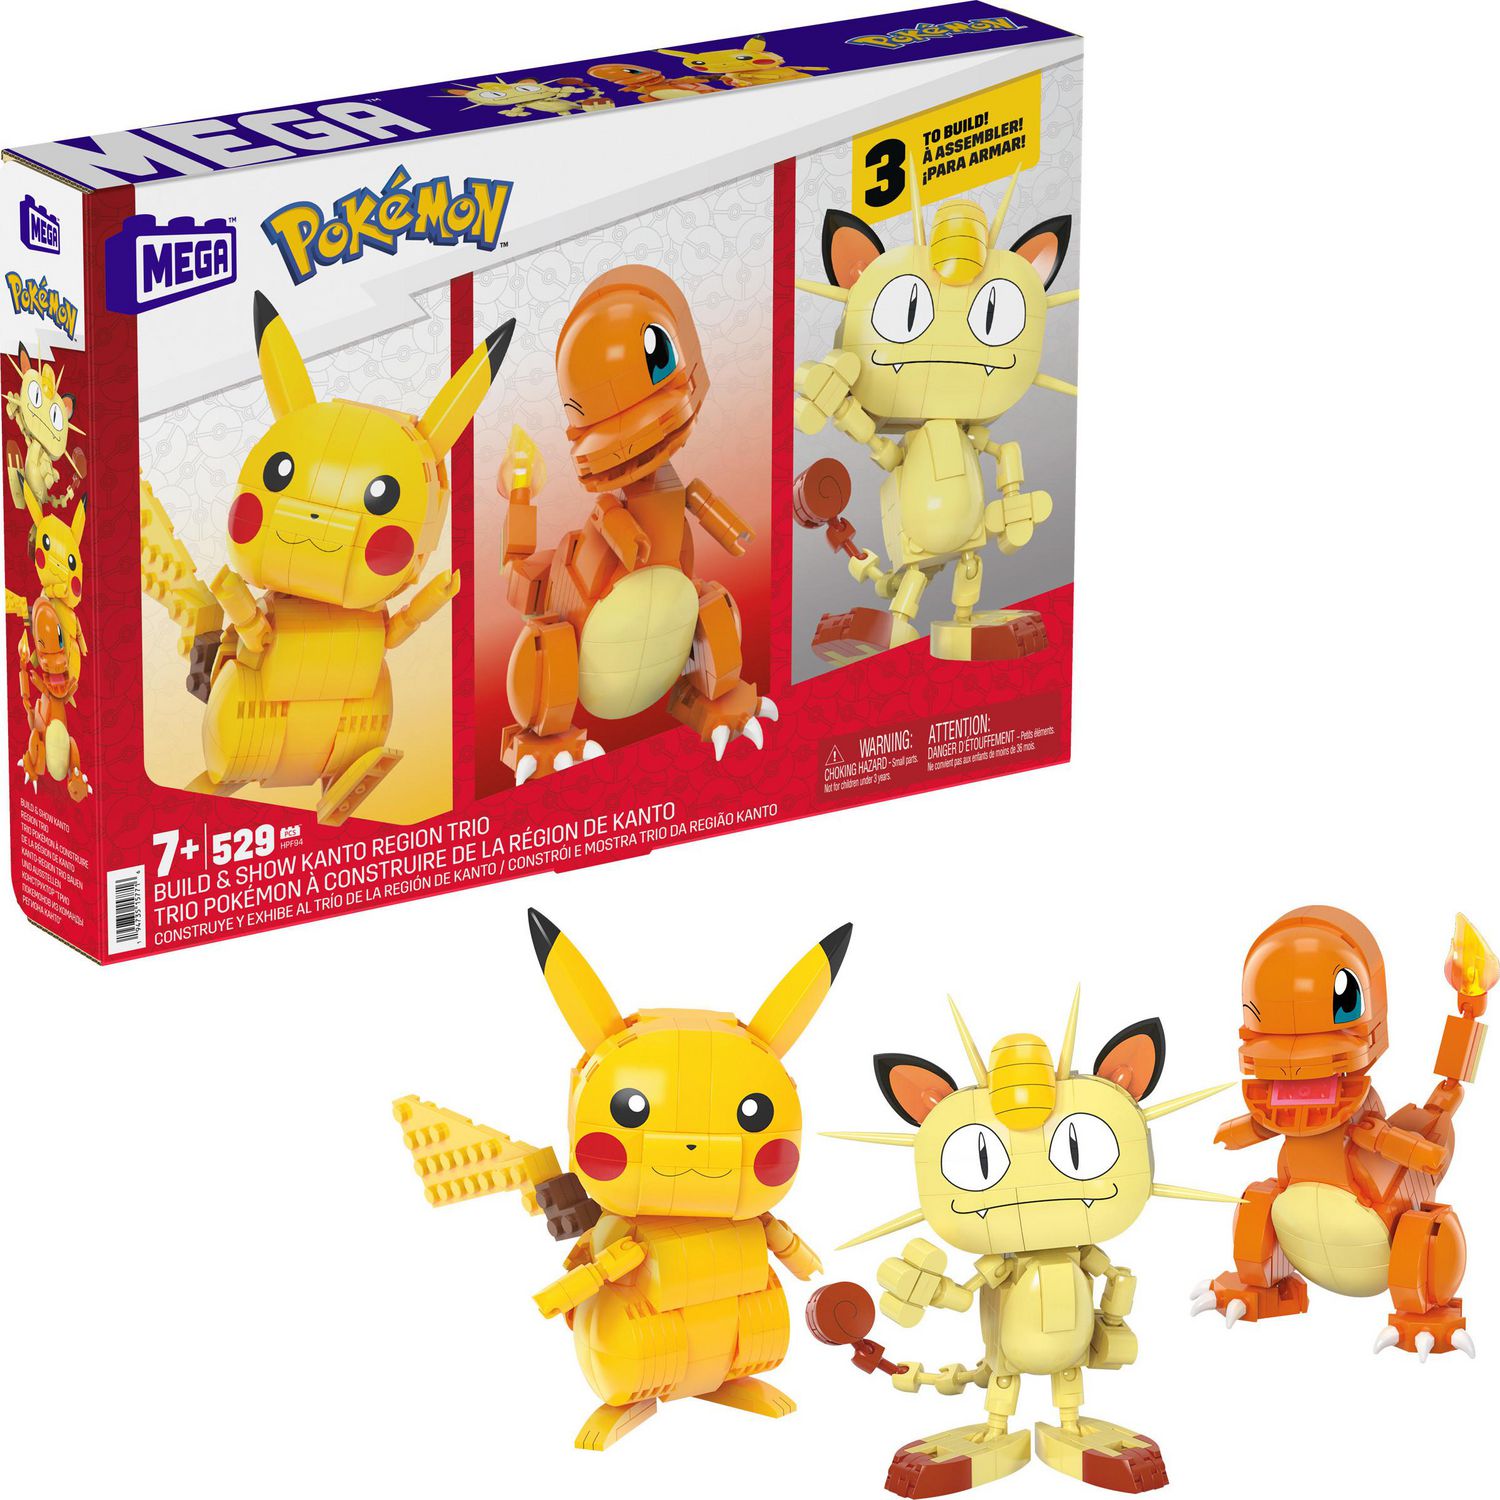 MEGA Pokémon Building Kit, Kanto Region Trio with 3 Action Figures - 529  Pieces, Ages 7+